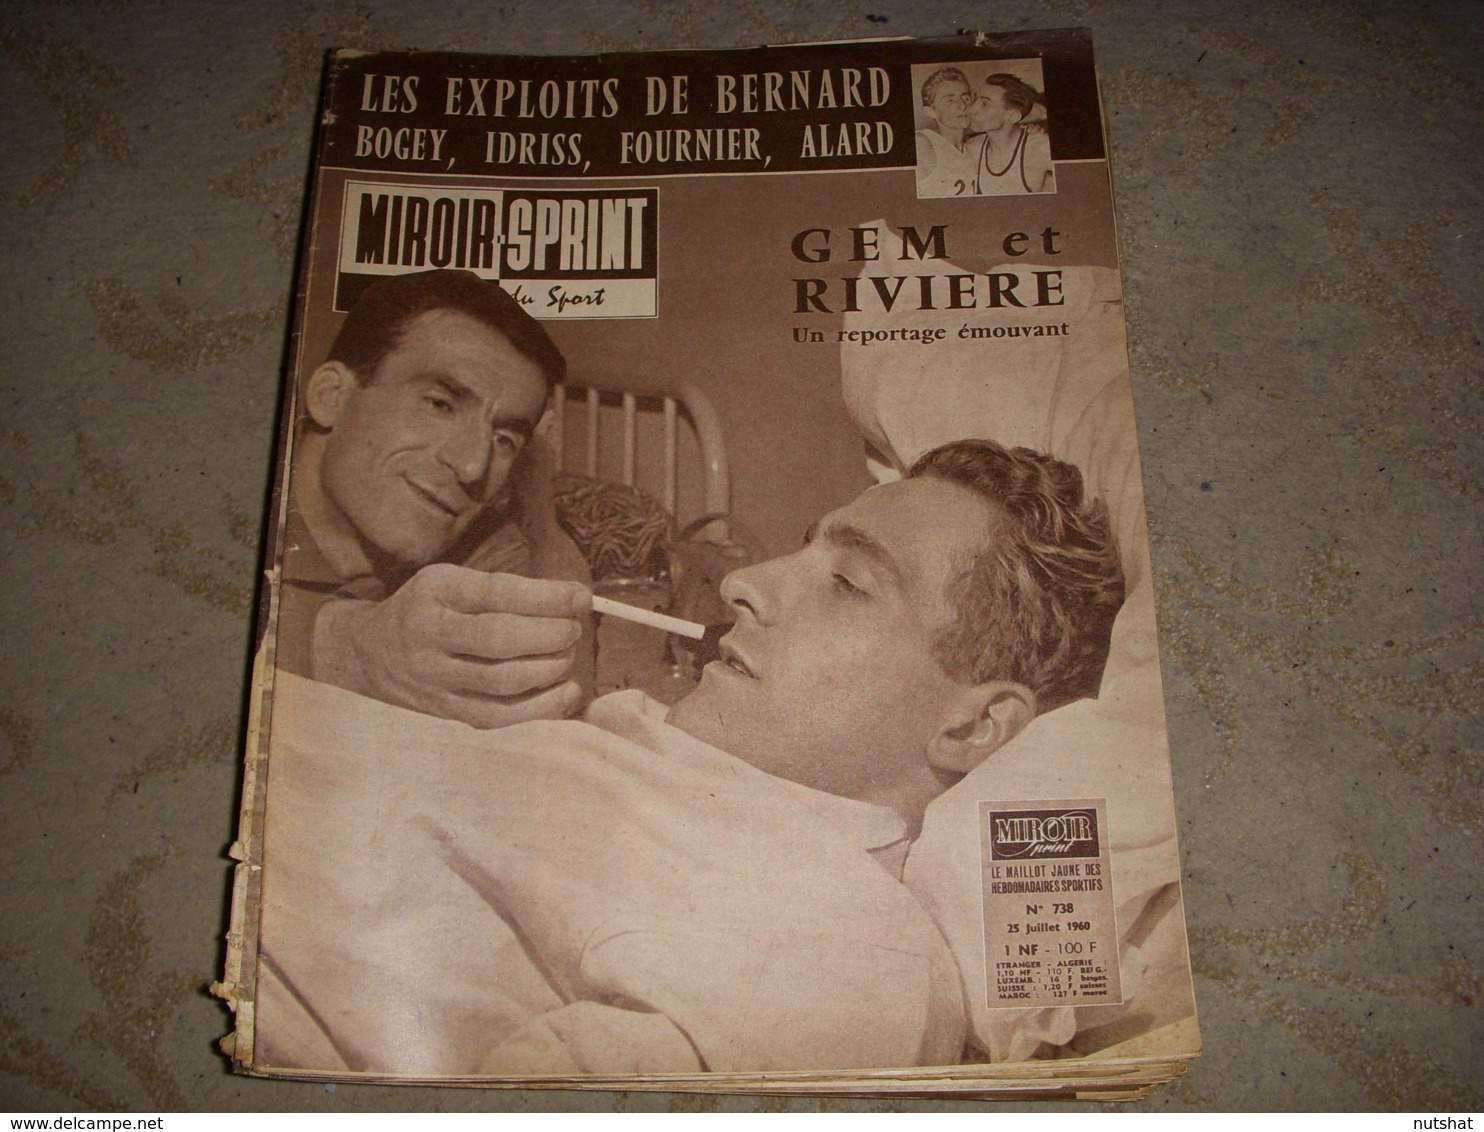 MIROIR SPRINT 738 25.07.1960 CYCLISME GEMINIANI RIVIERE ATHLE Michel BERNARD - Sport